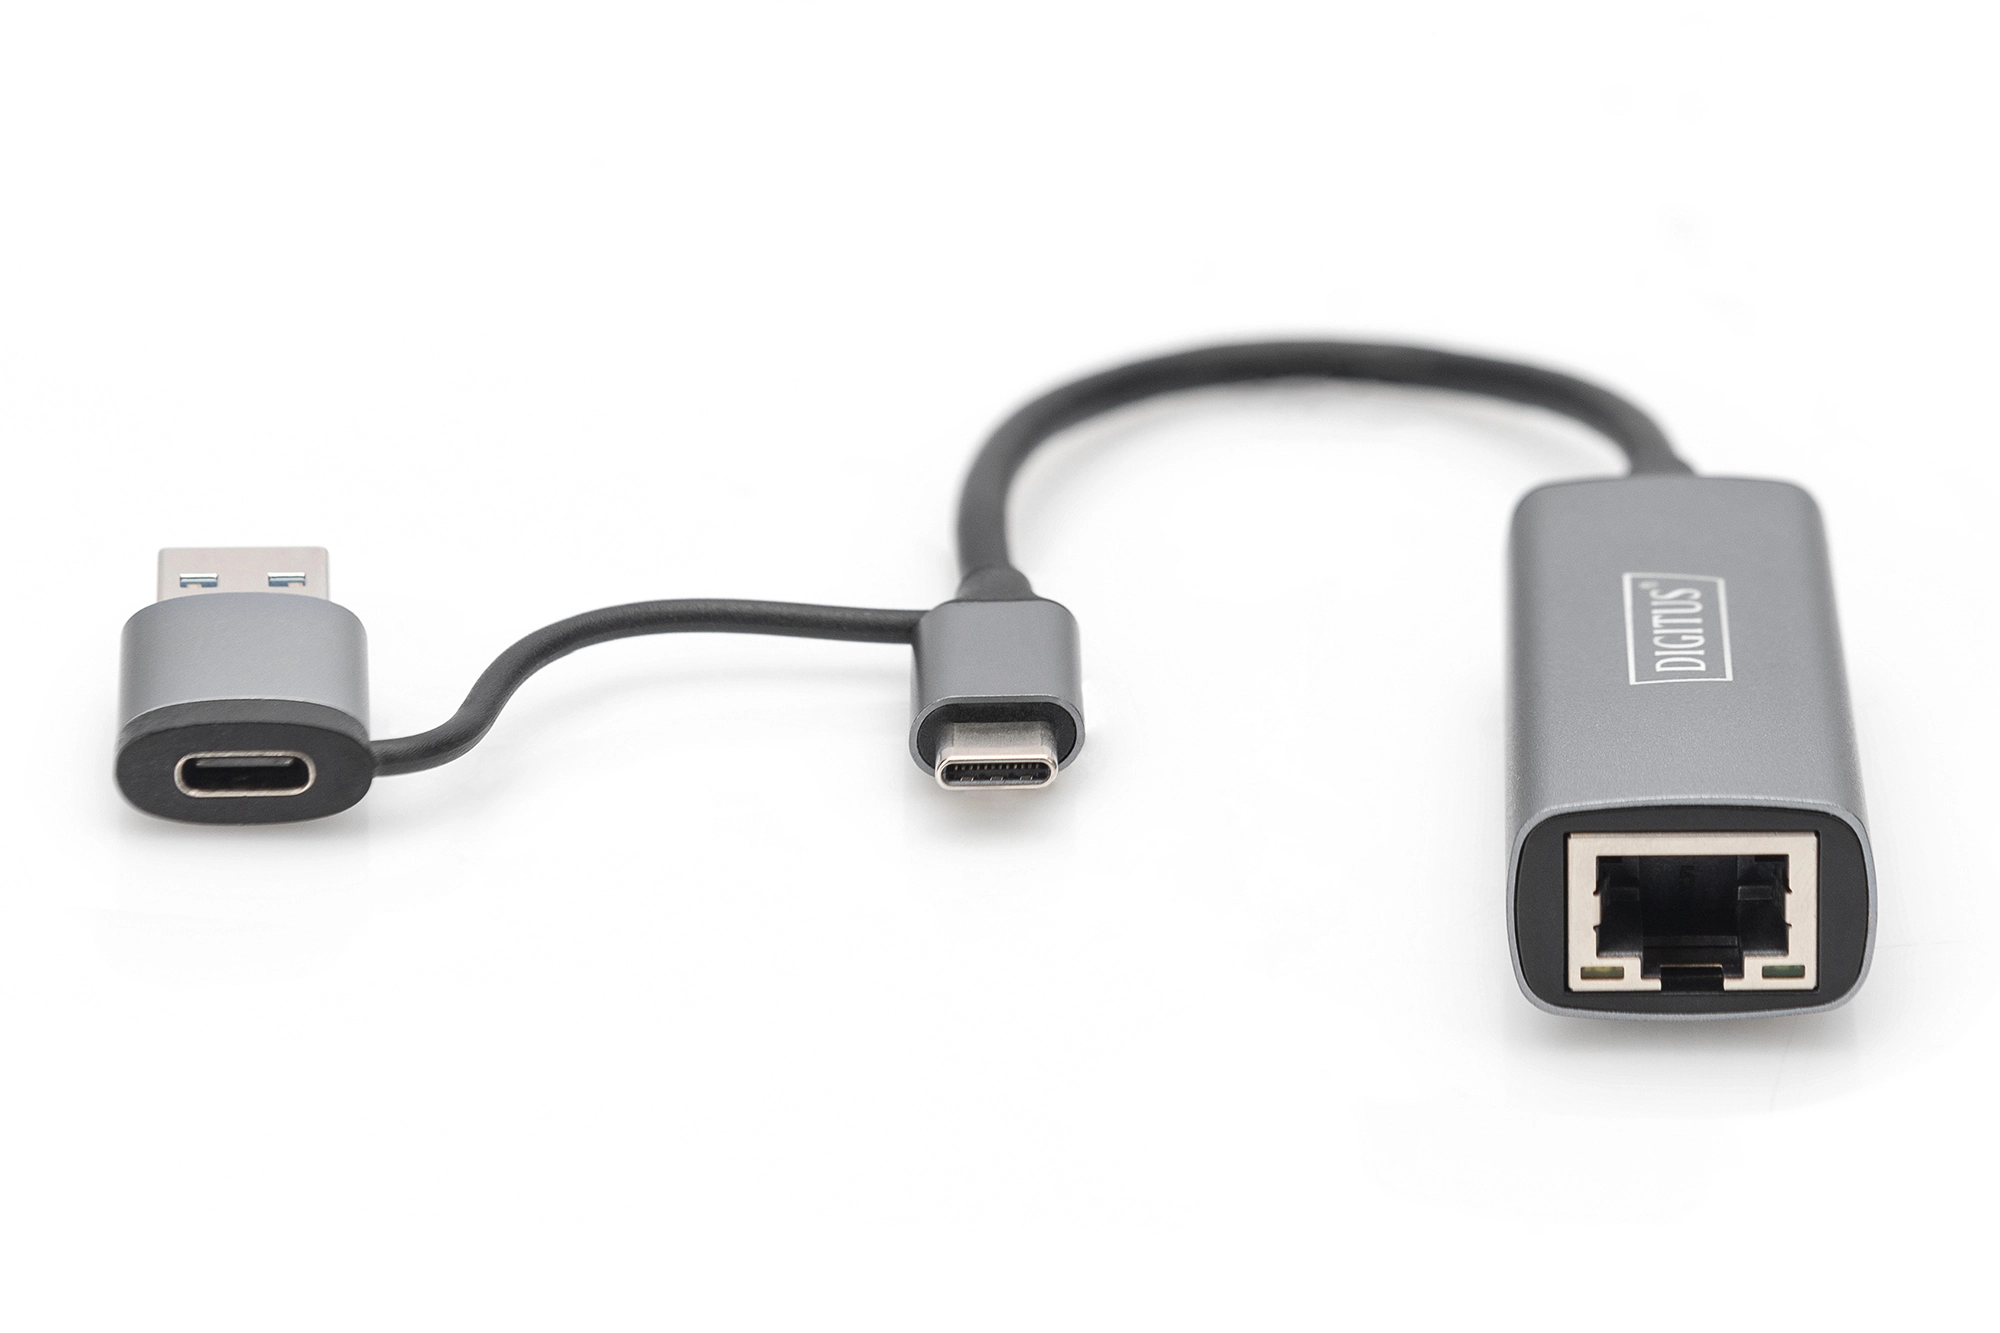 DIGITUS USB Type-C Gigabit Ethernet Adapter 2.5G, USB-C + USB A (USB3.1/3.0)